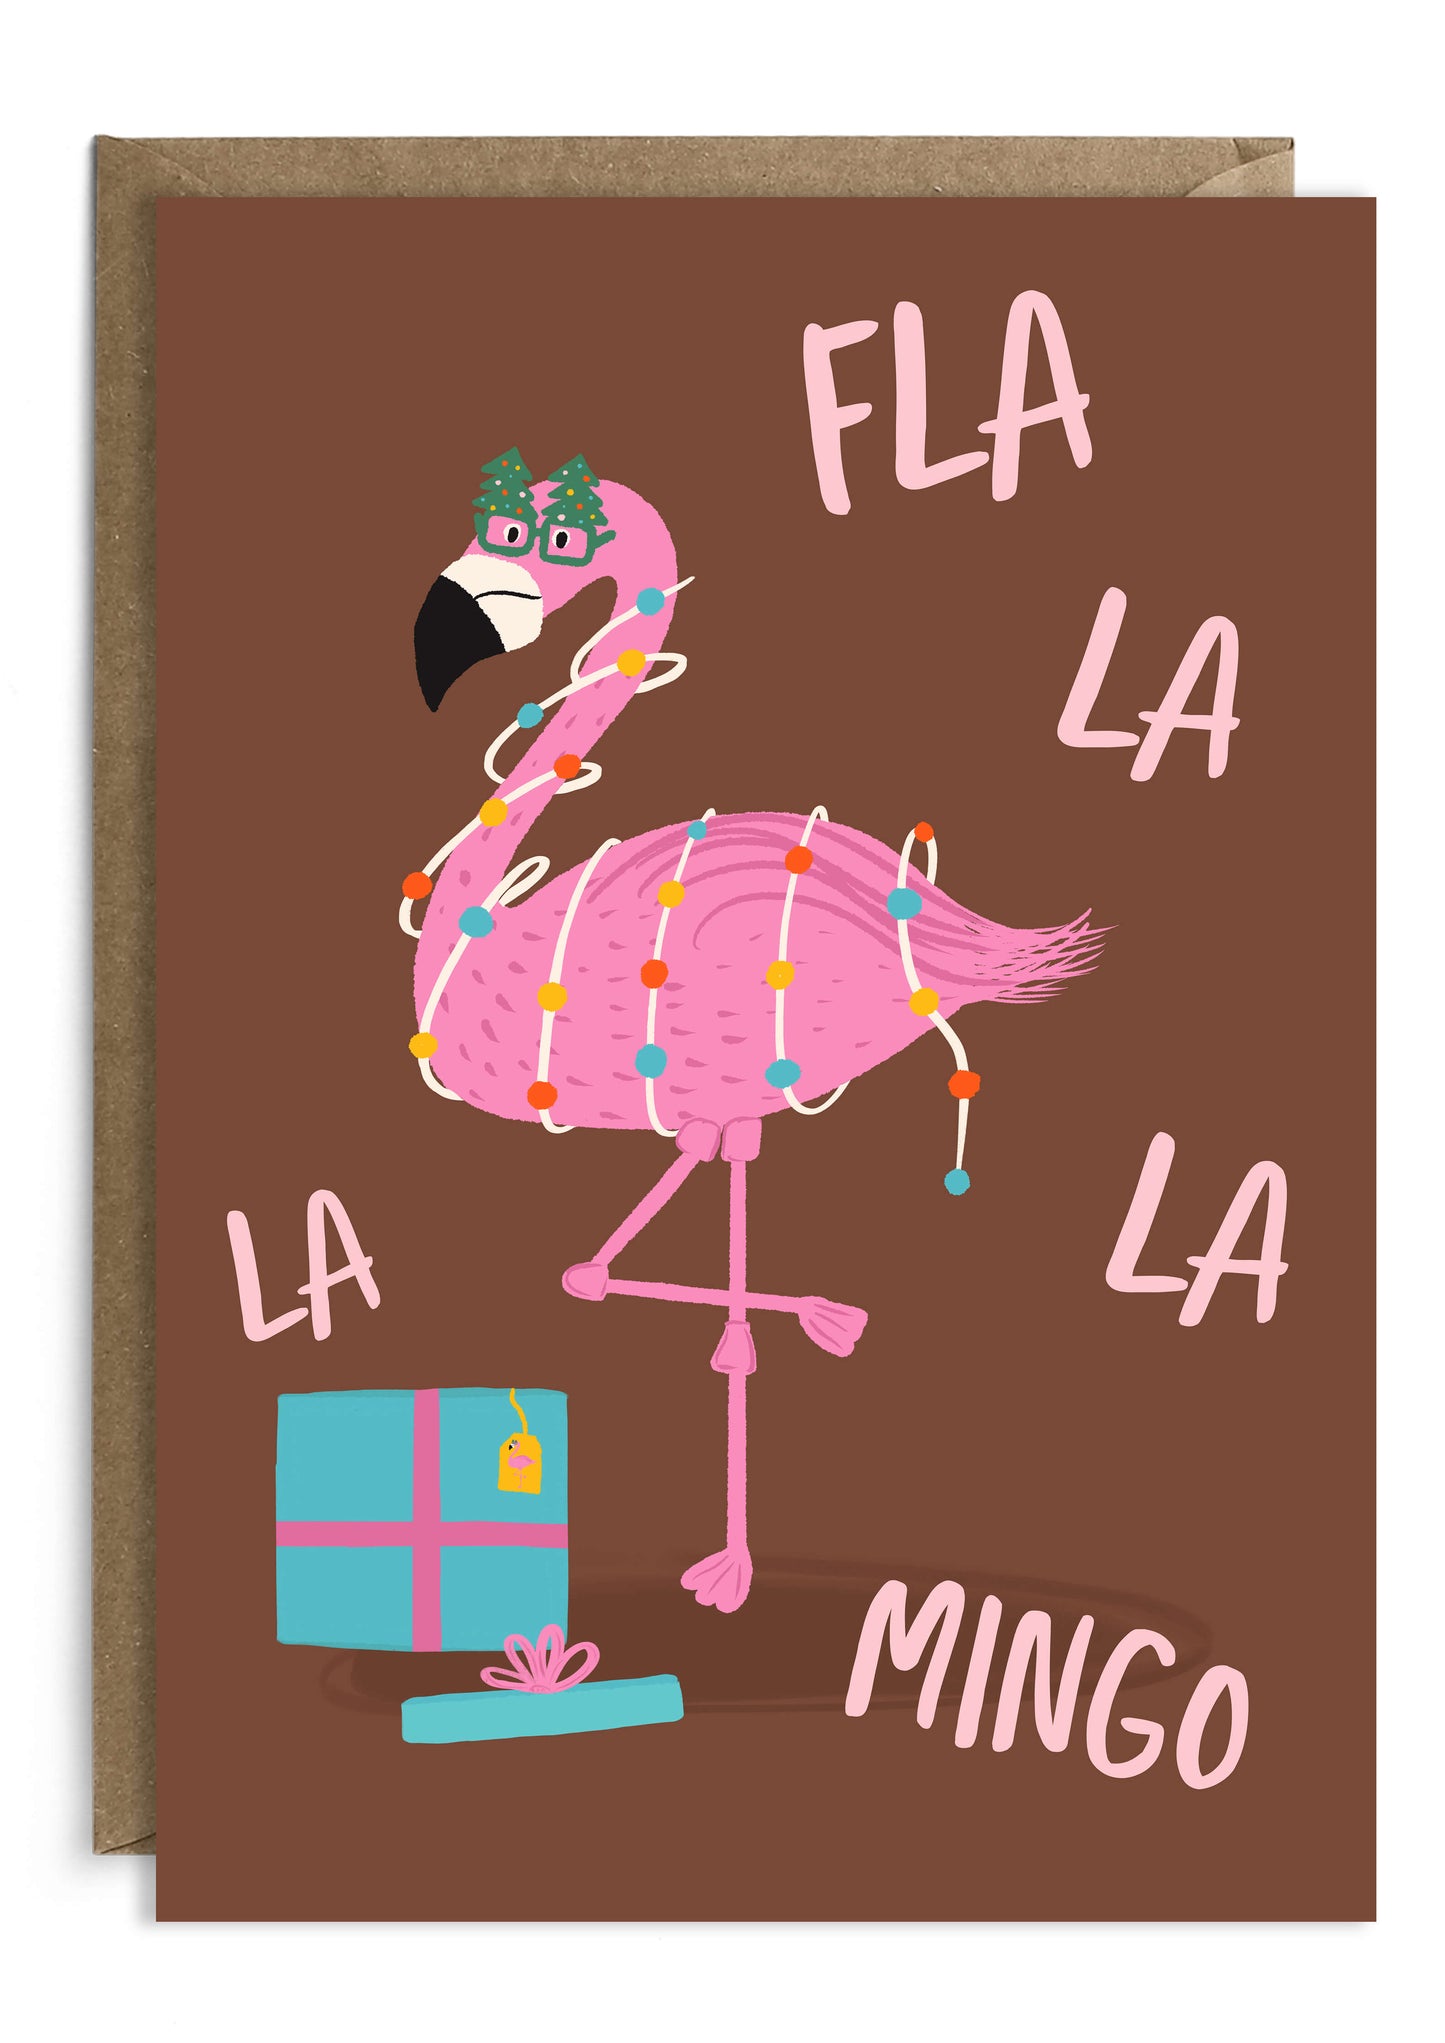 Fla-La-La-Mingo - Christmas Card